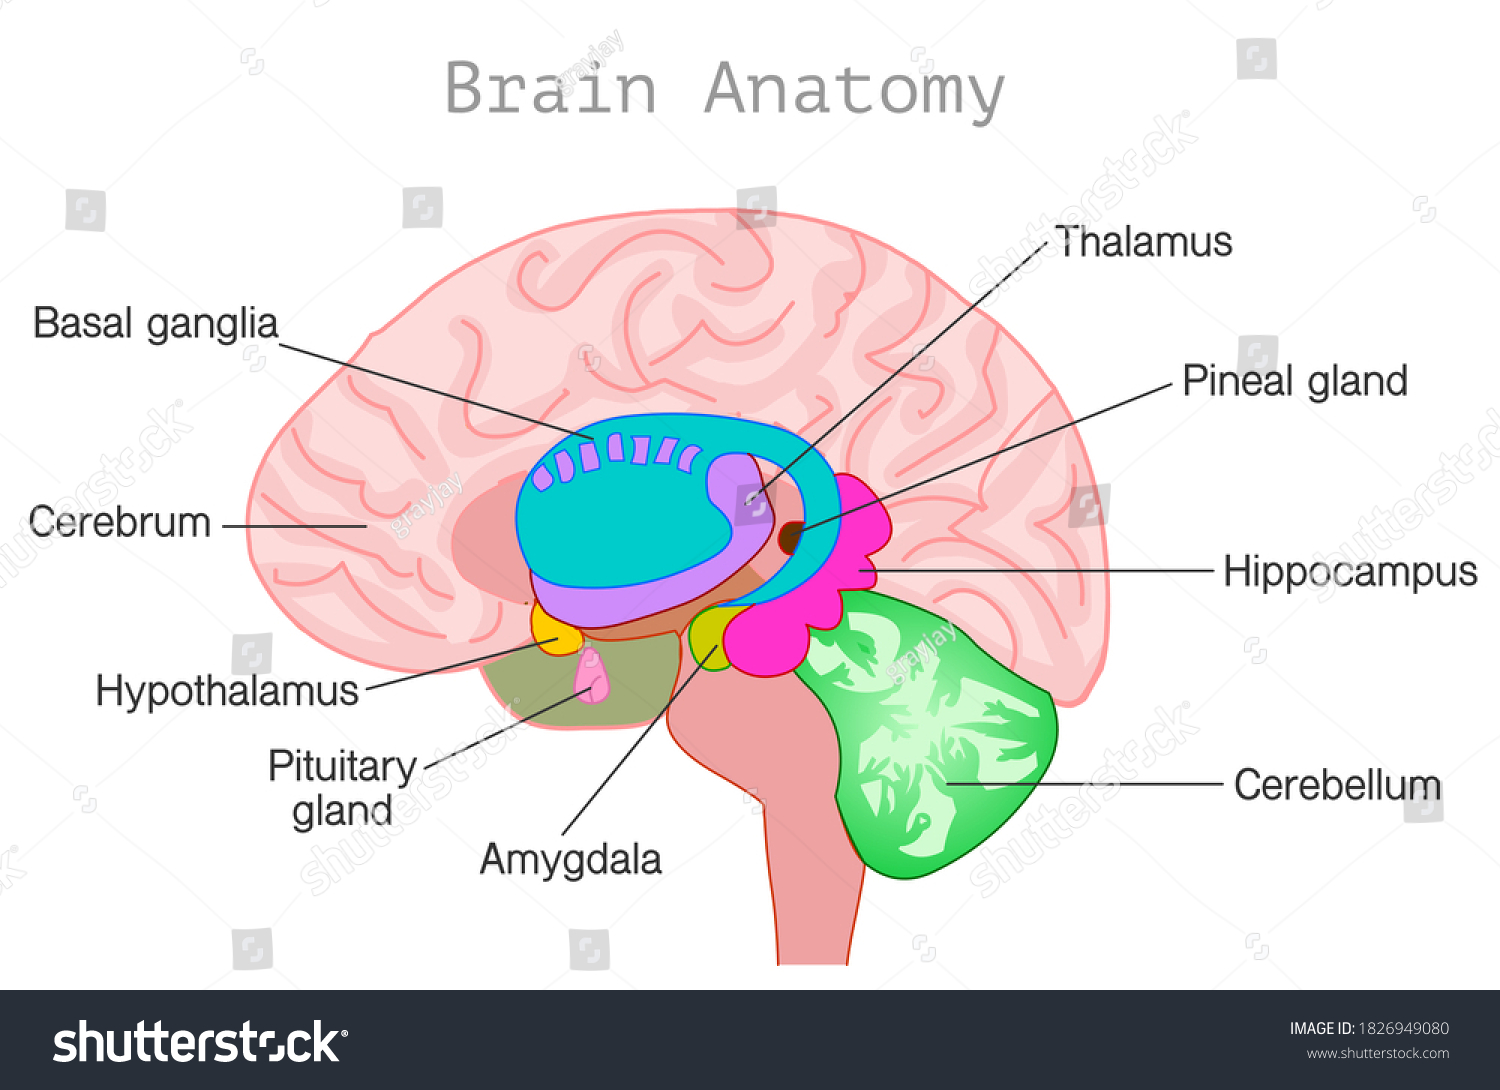 SVG of Brain anatomy. Autonomic nervous system diagram. Organ parts section, limbic system, basal ganglia, hypothalamus, cerebellum, pineal, pituitary gland, hypothalamus, ventricles. Vector illustration svg